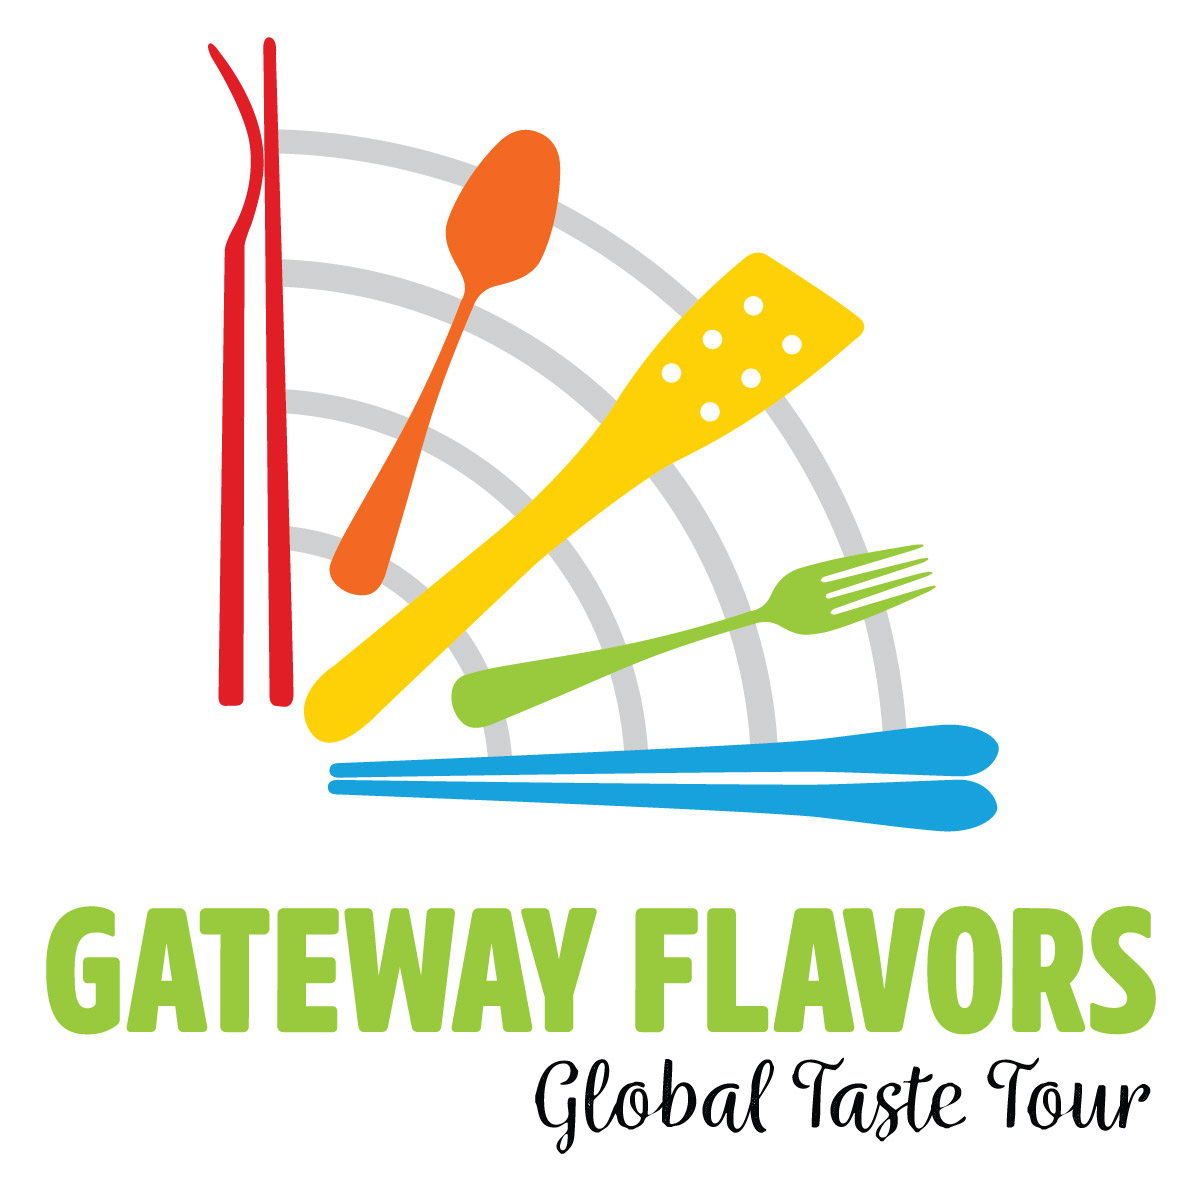 Gateway Flavors Global Taste Tour Logo